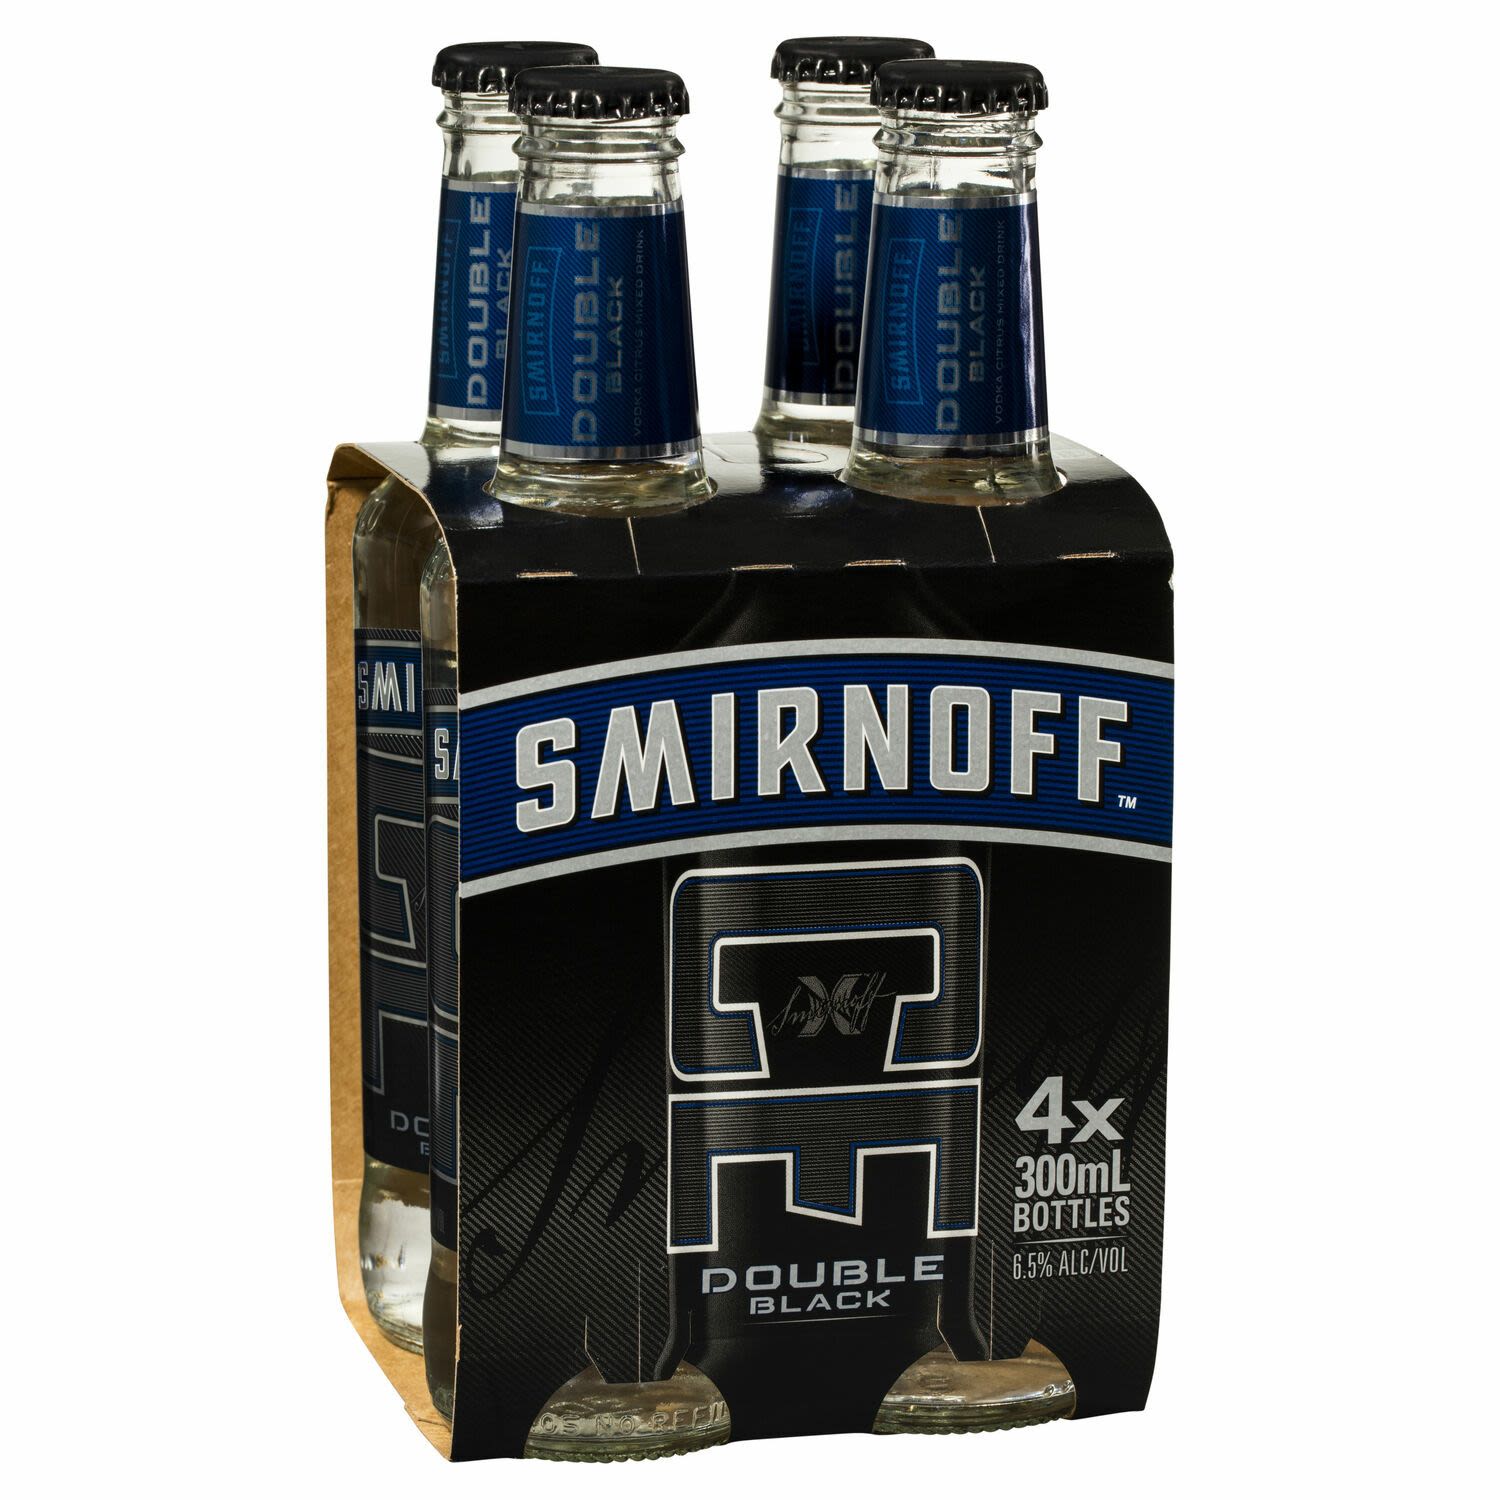 Smirnoff Ice Double Black Bottle 300mL 4 Pack